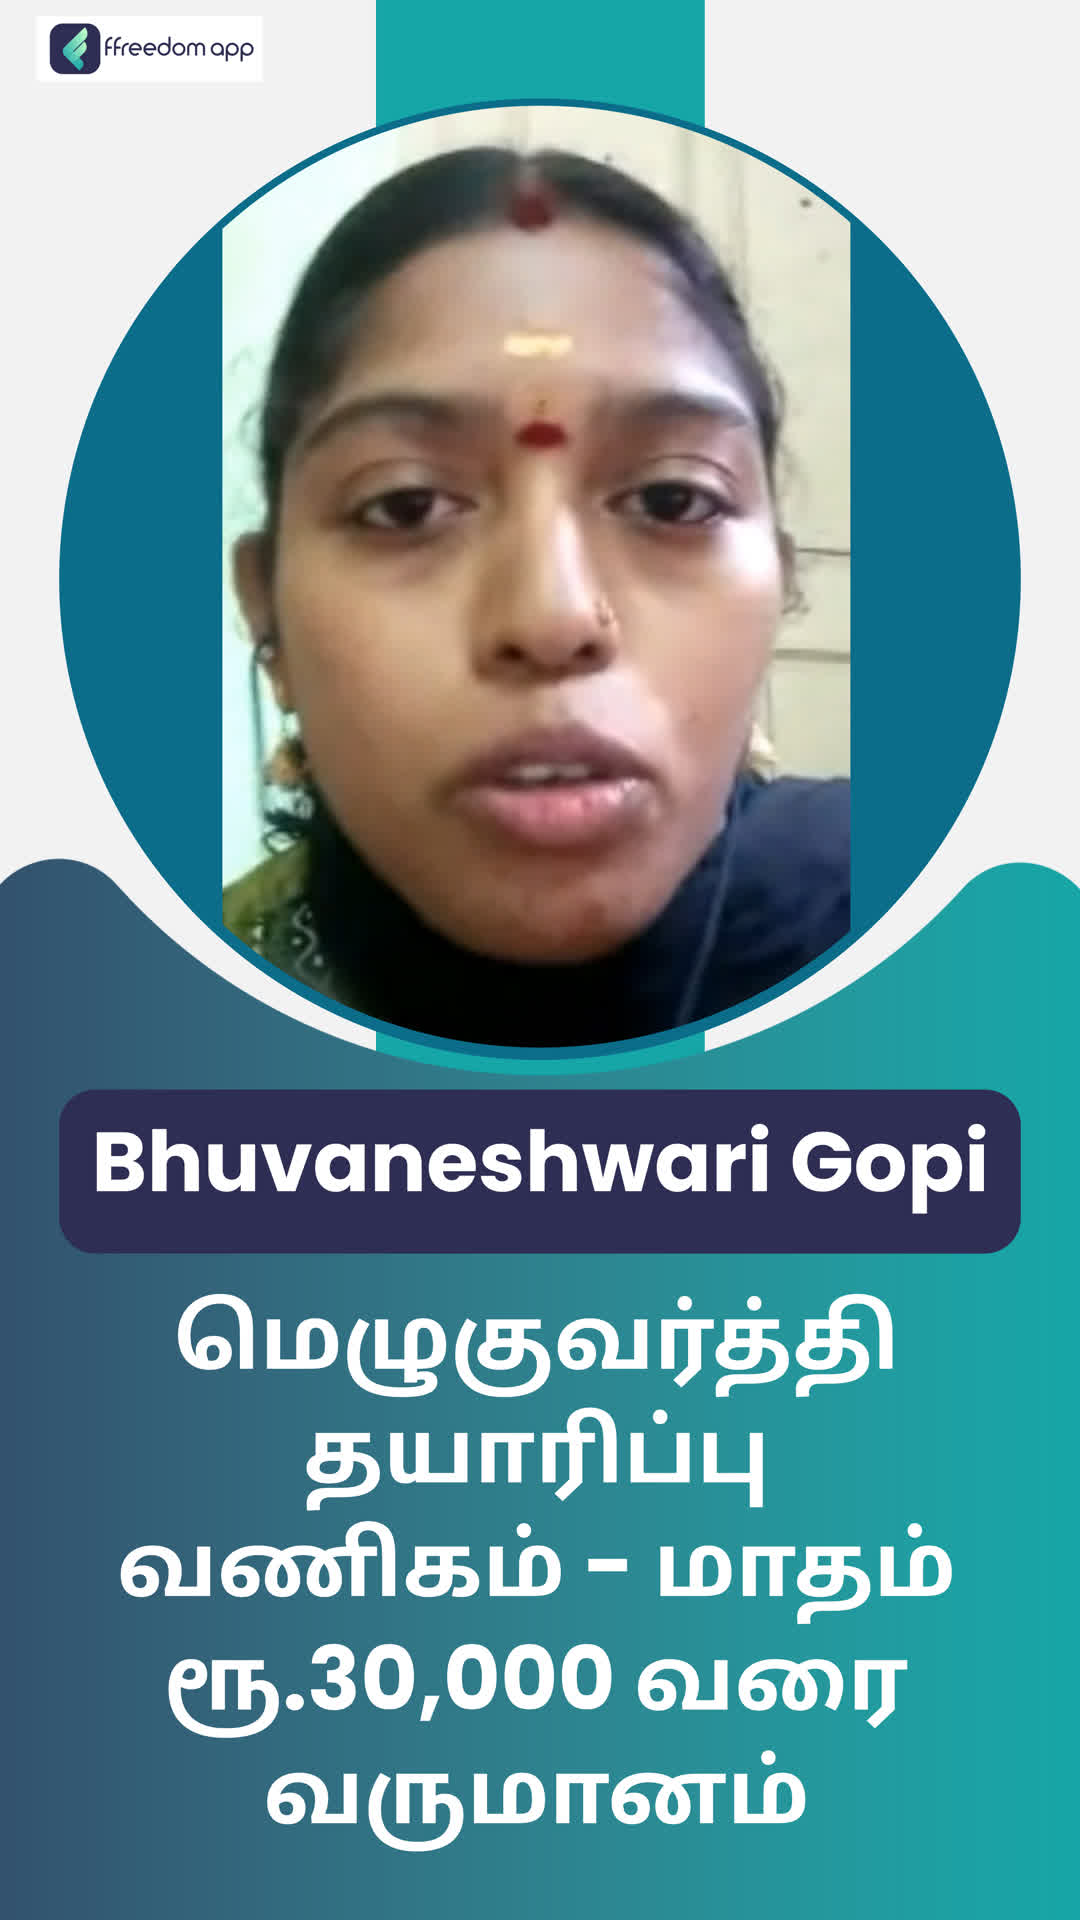 Bhuvaneshwari Gopi's Honest Review of ffreedom app - Thiruvallur ,Tamil Nadu